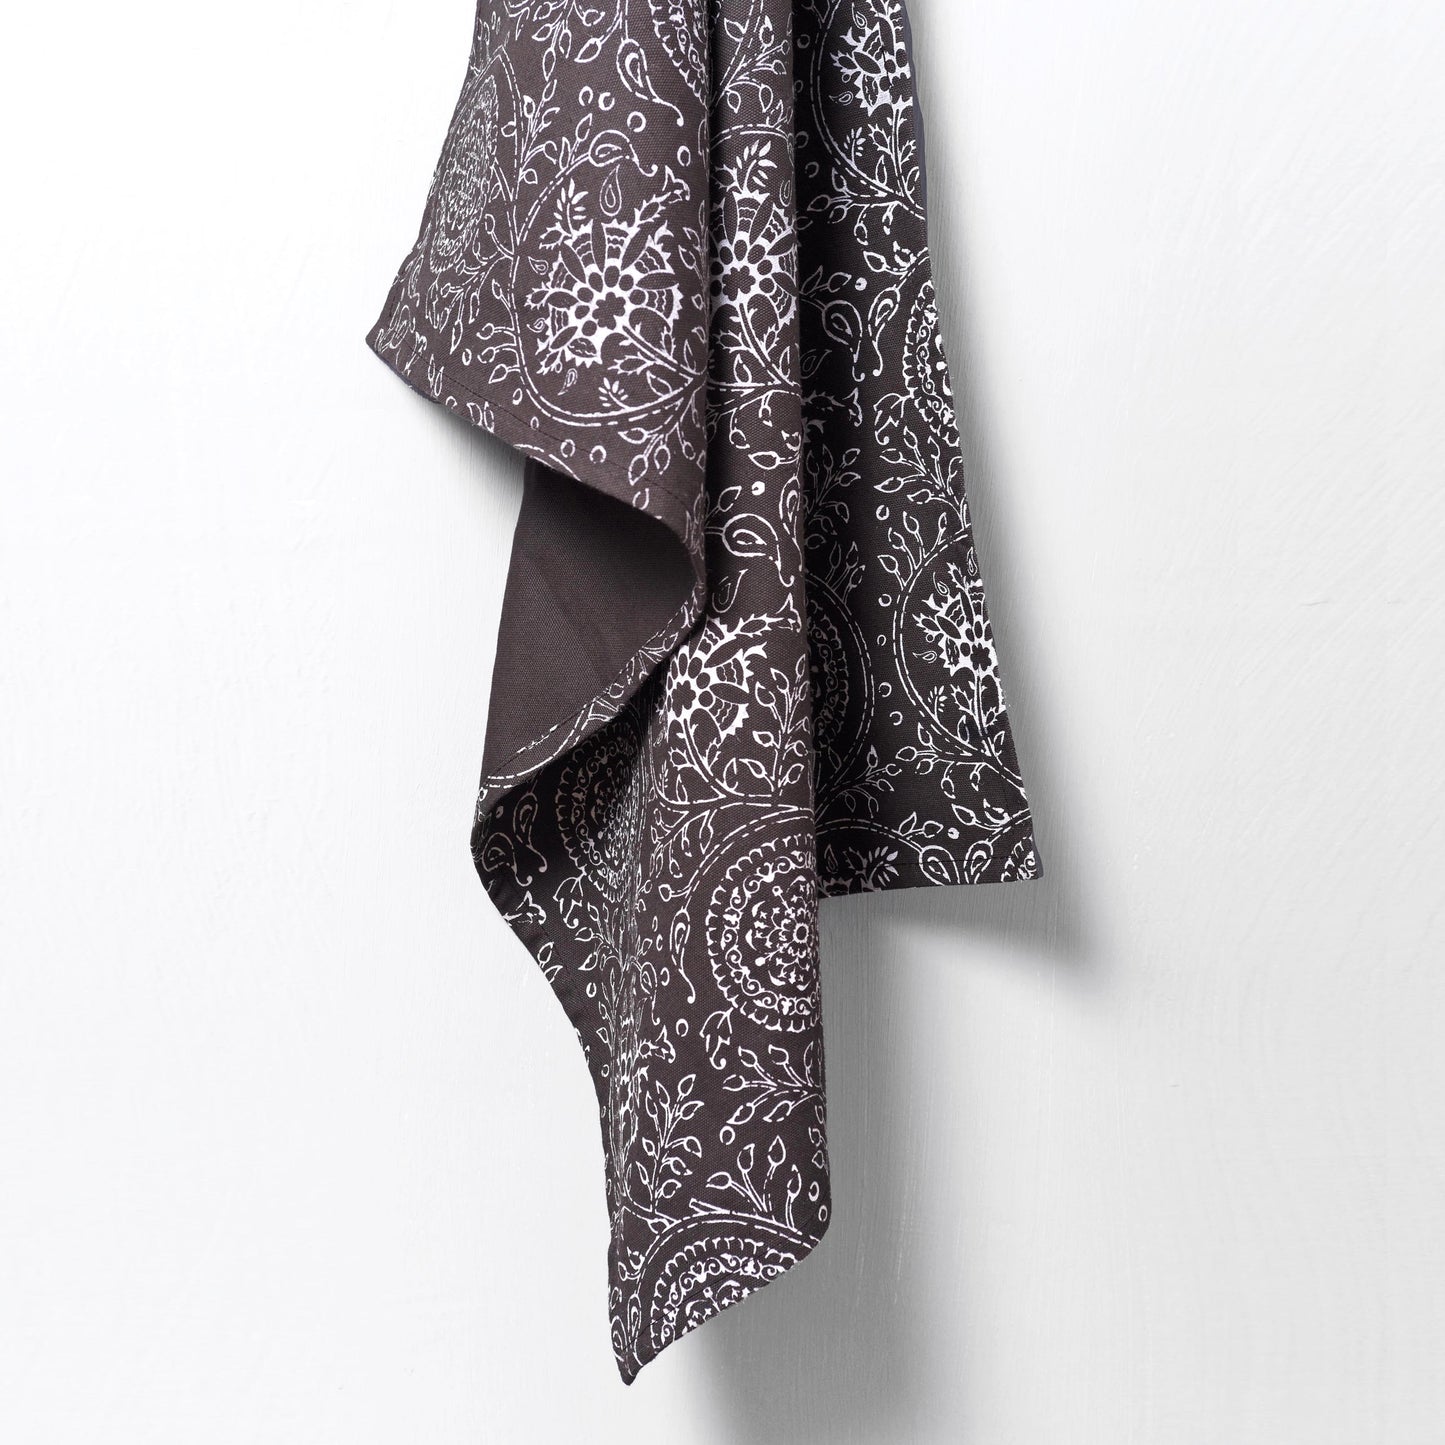 KALAMKARI Dark brown Kitchen Towel, floral print, Indian ethnic, printed Tea Towel, 100% cotton, size 20X28 inches